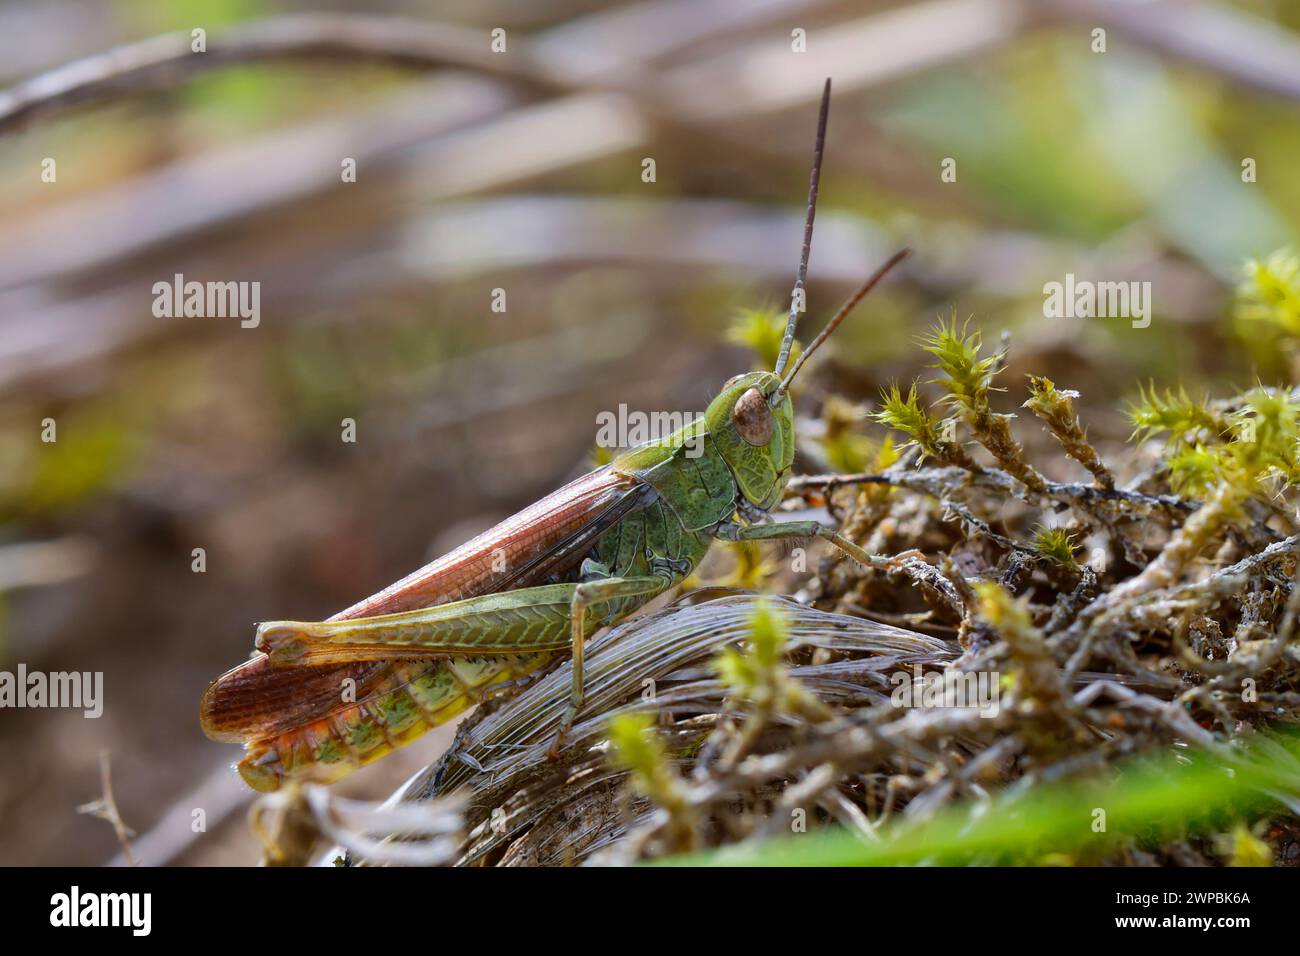 Field grasshopper, Common field grasshopper (Chorthippus brunneus, Glyptobothrus brunneus, Chorthippus bicolor, Stauroderus brunneus), male on moss, s Stock Photo